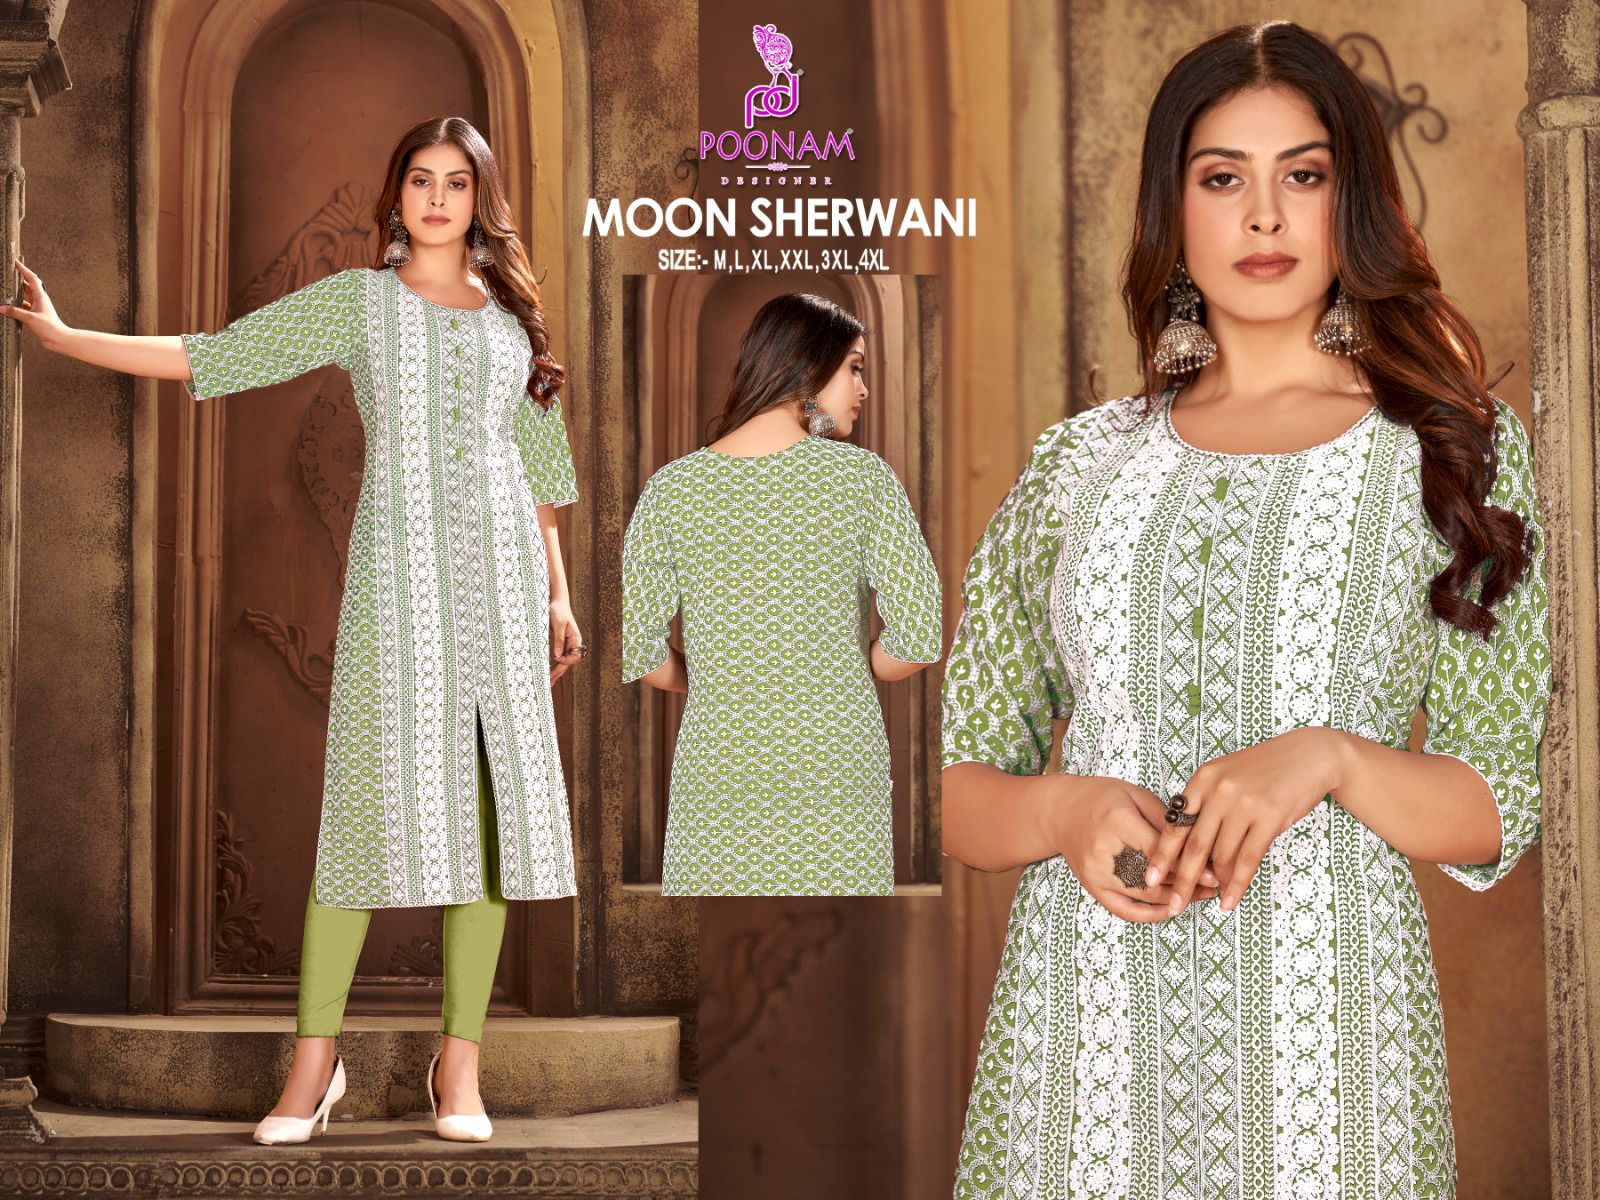 Poonam Moon Sherwani collection 3